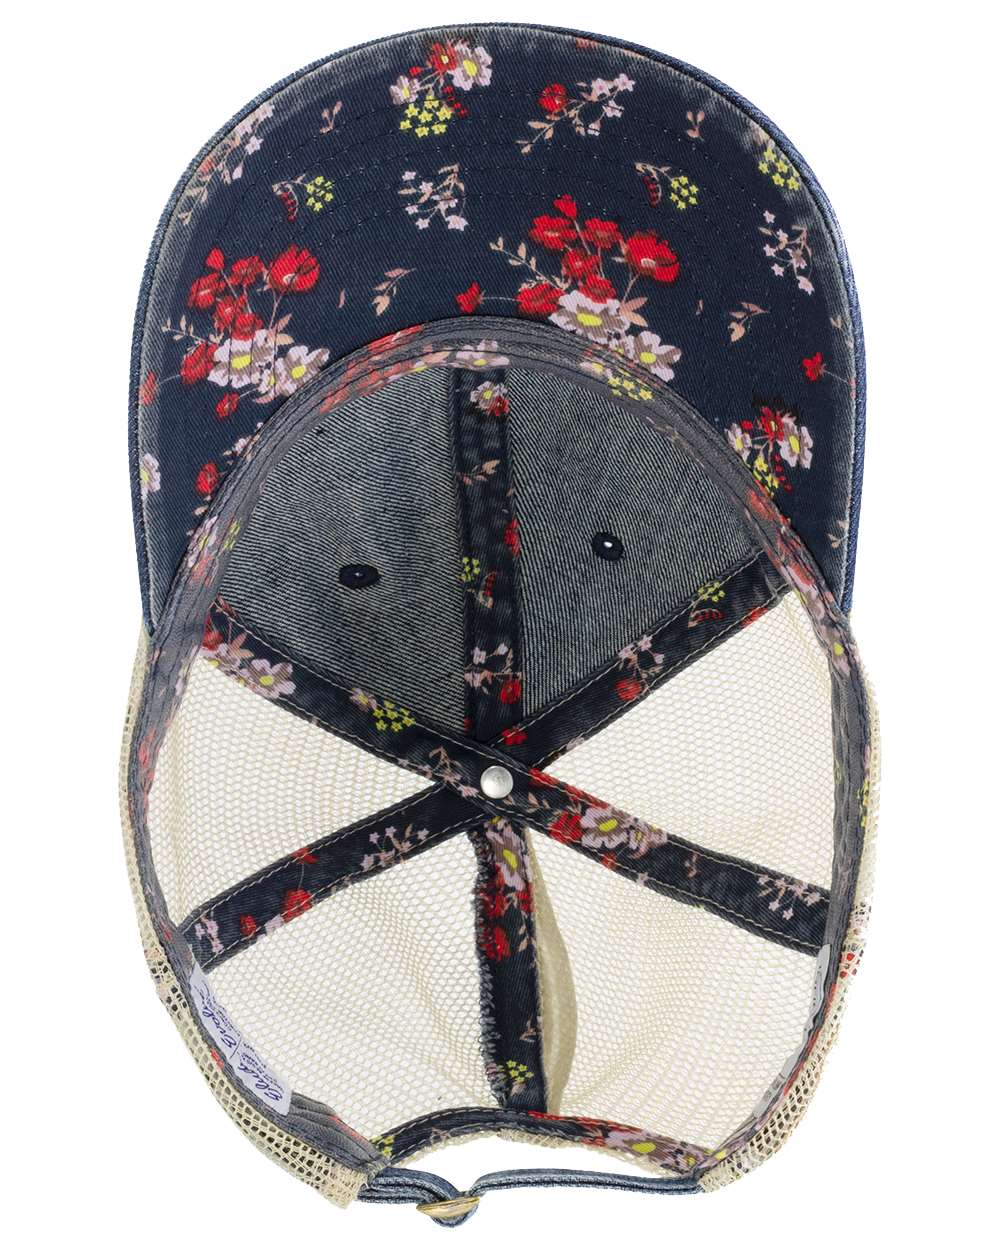 A women's denim mesh-back cap in denim with floral print.